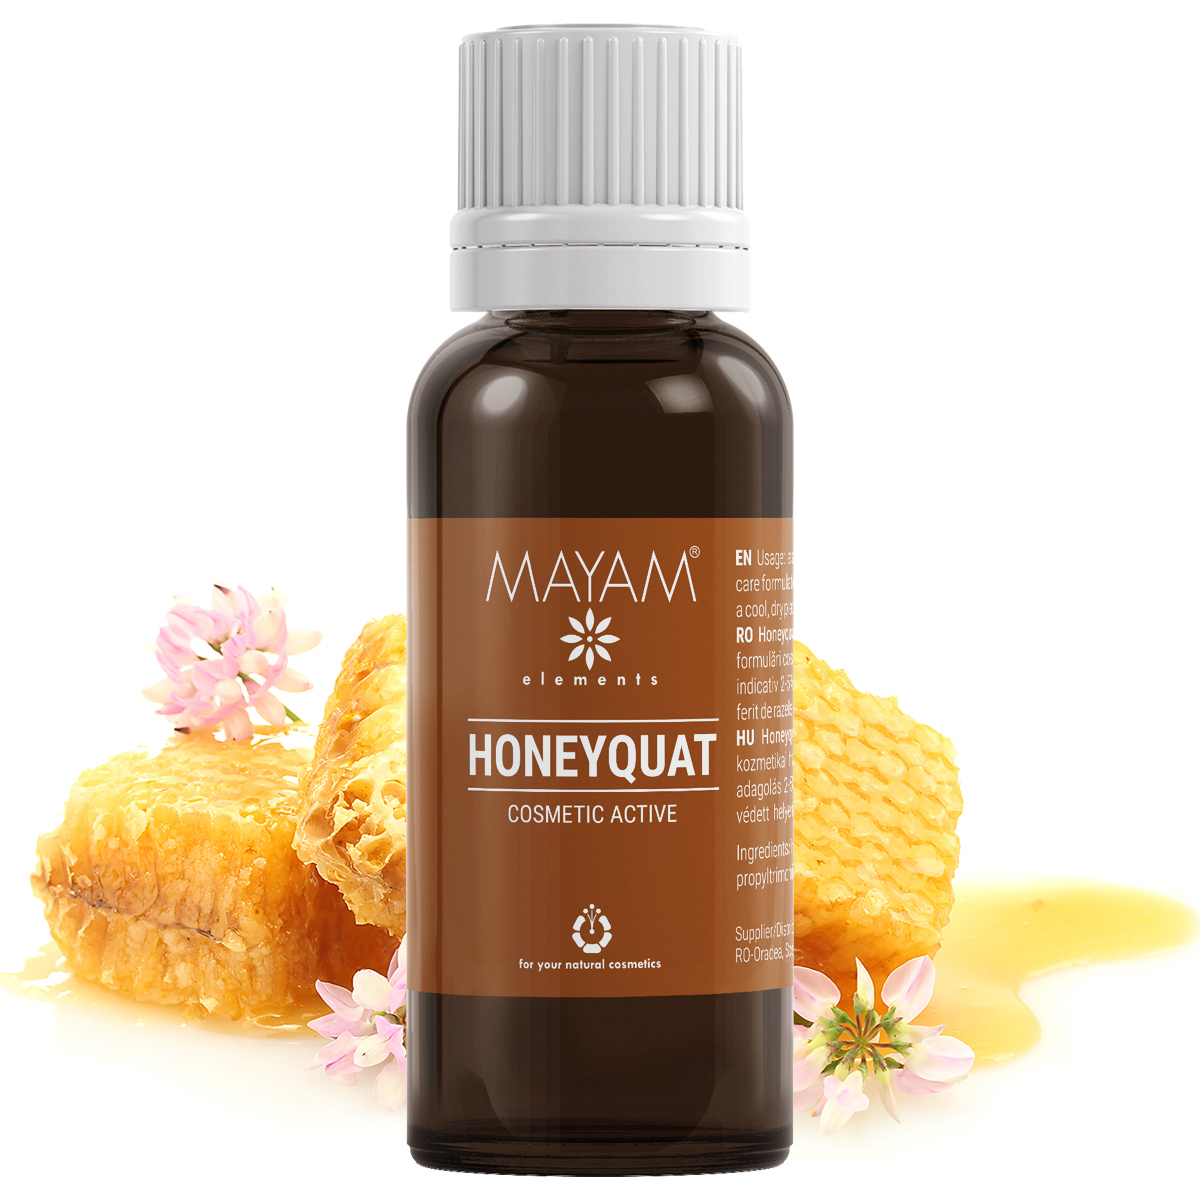 Activ cosmetic Honeyquat, M-1329, 28 g, Mayam